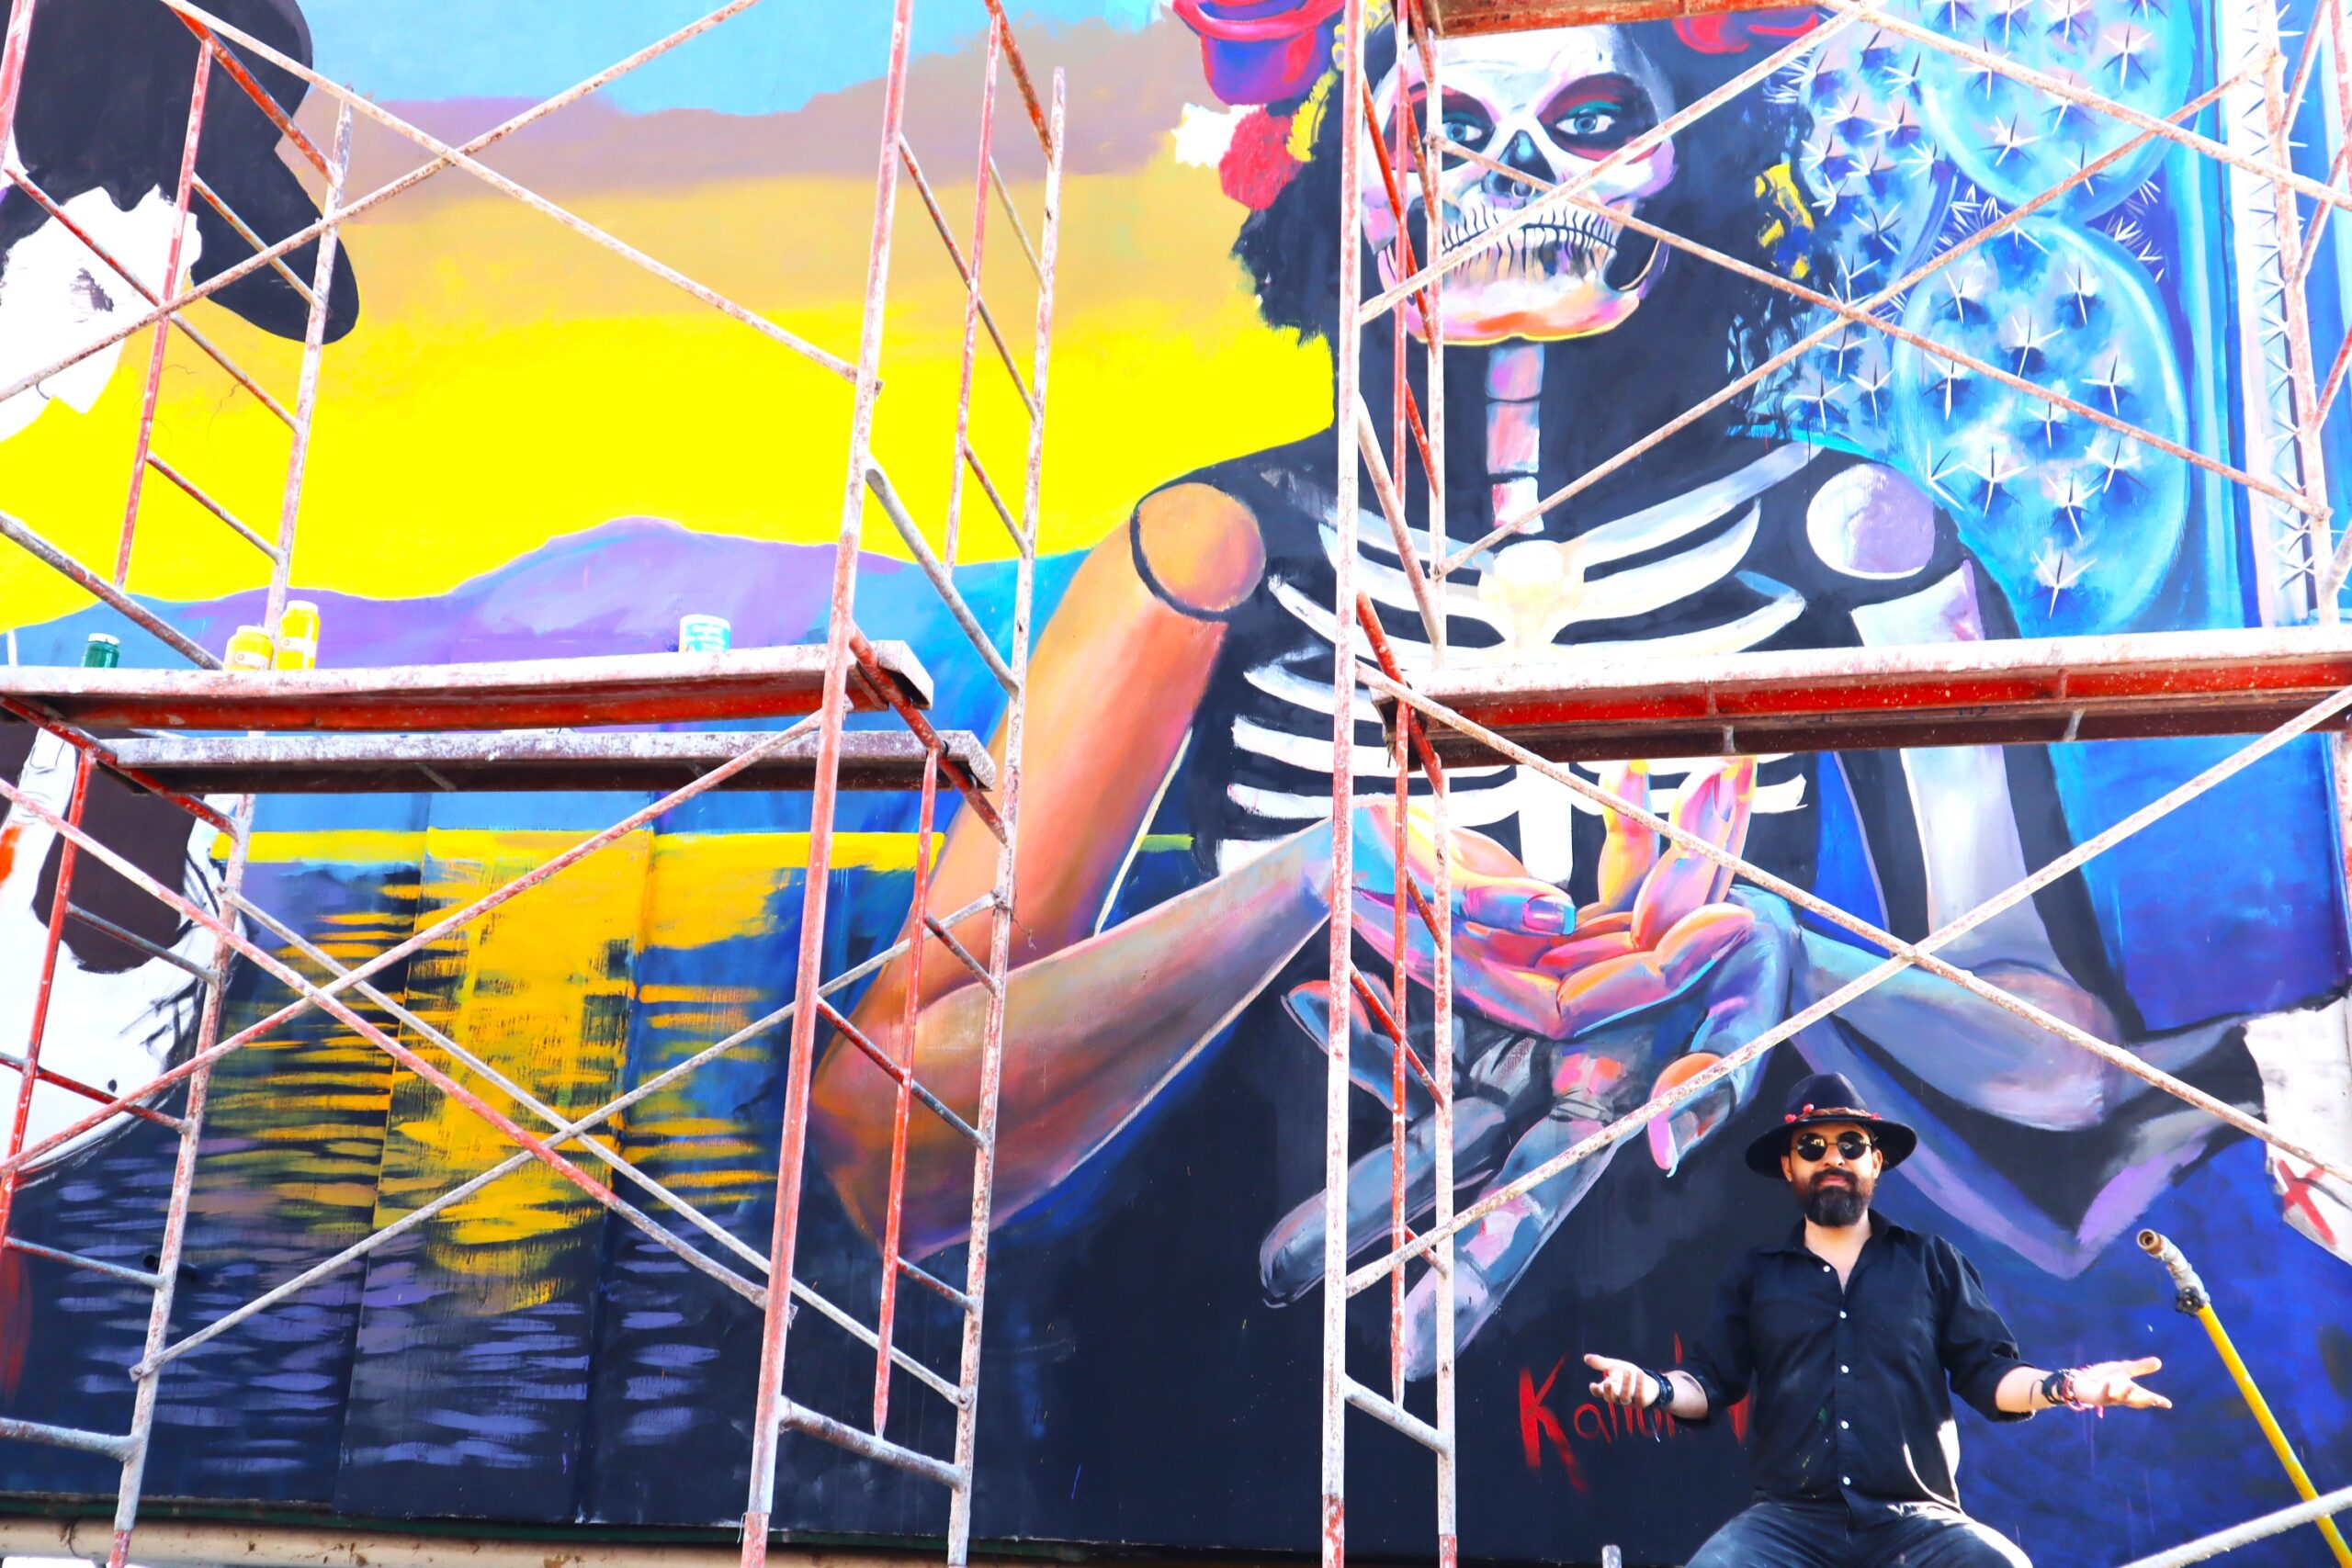 Profile: Kahuil Vega, new muralist now working in Ajijic